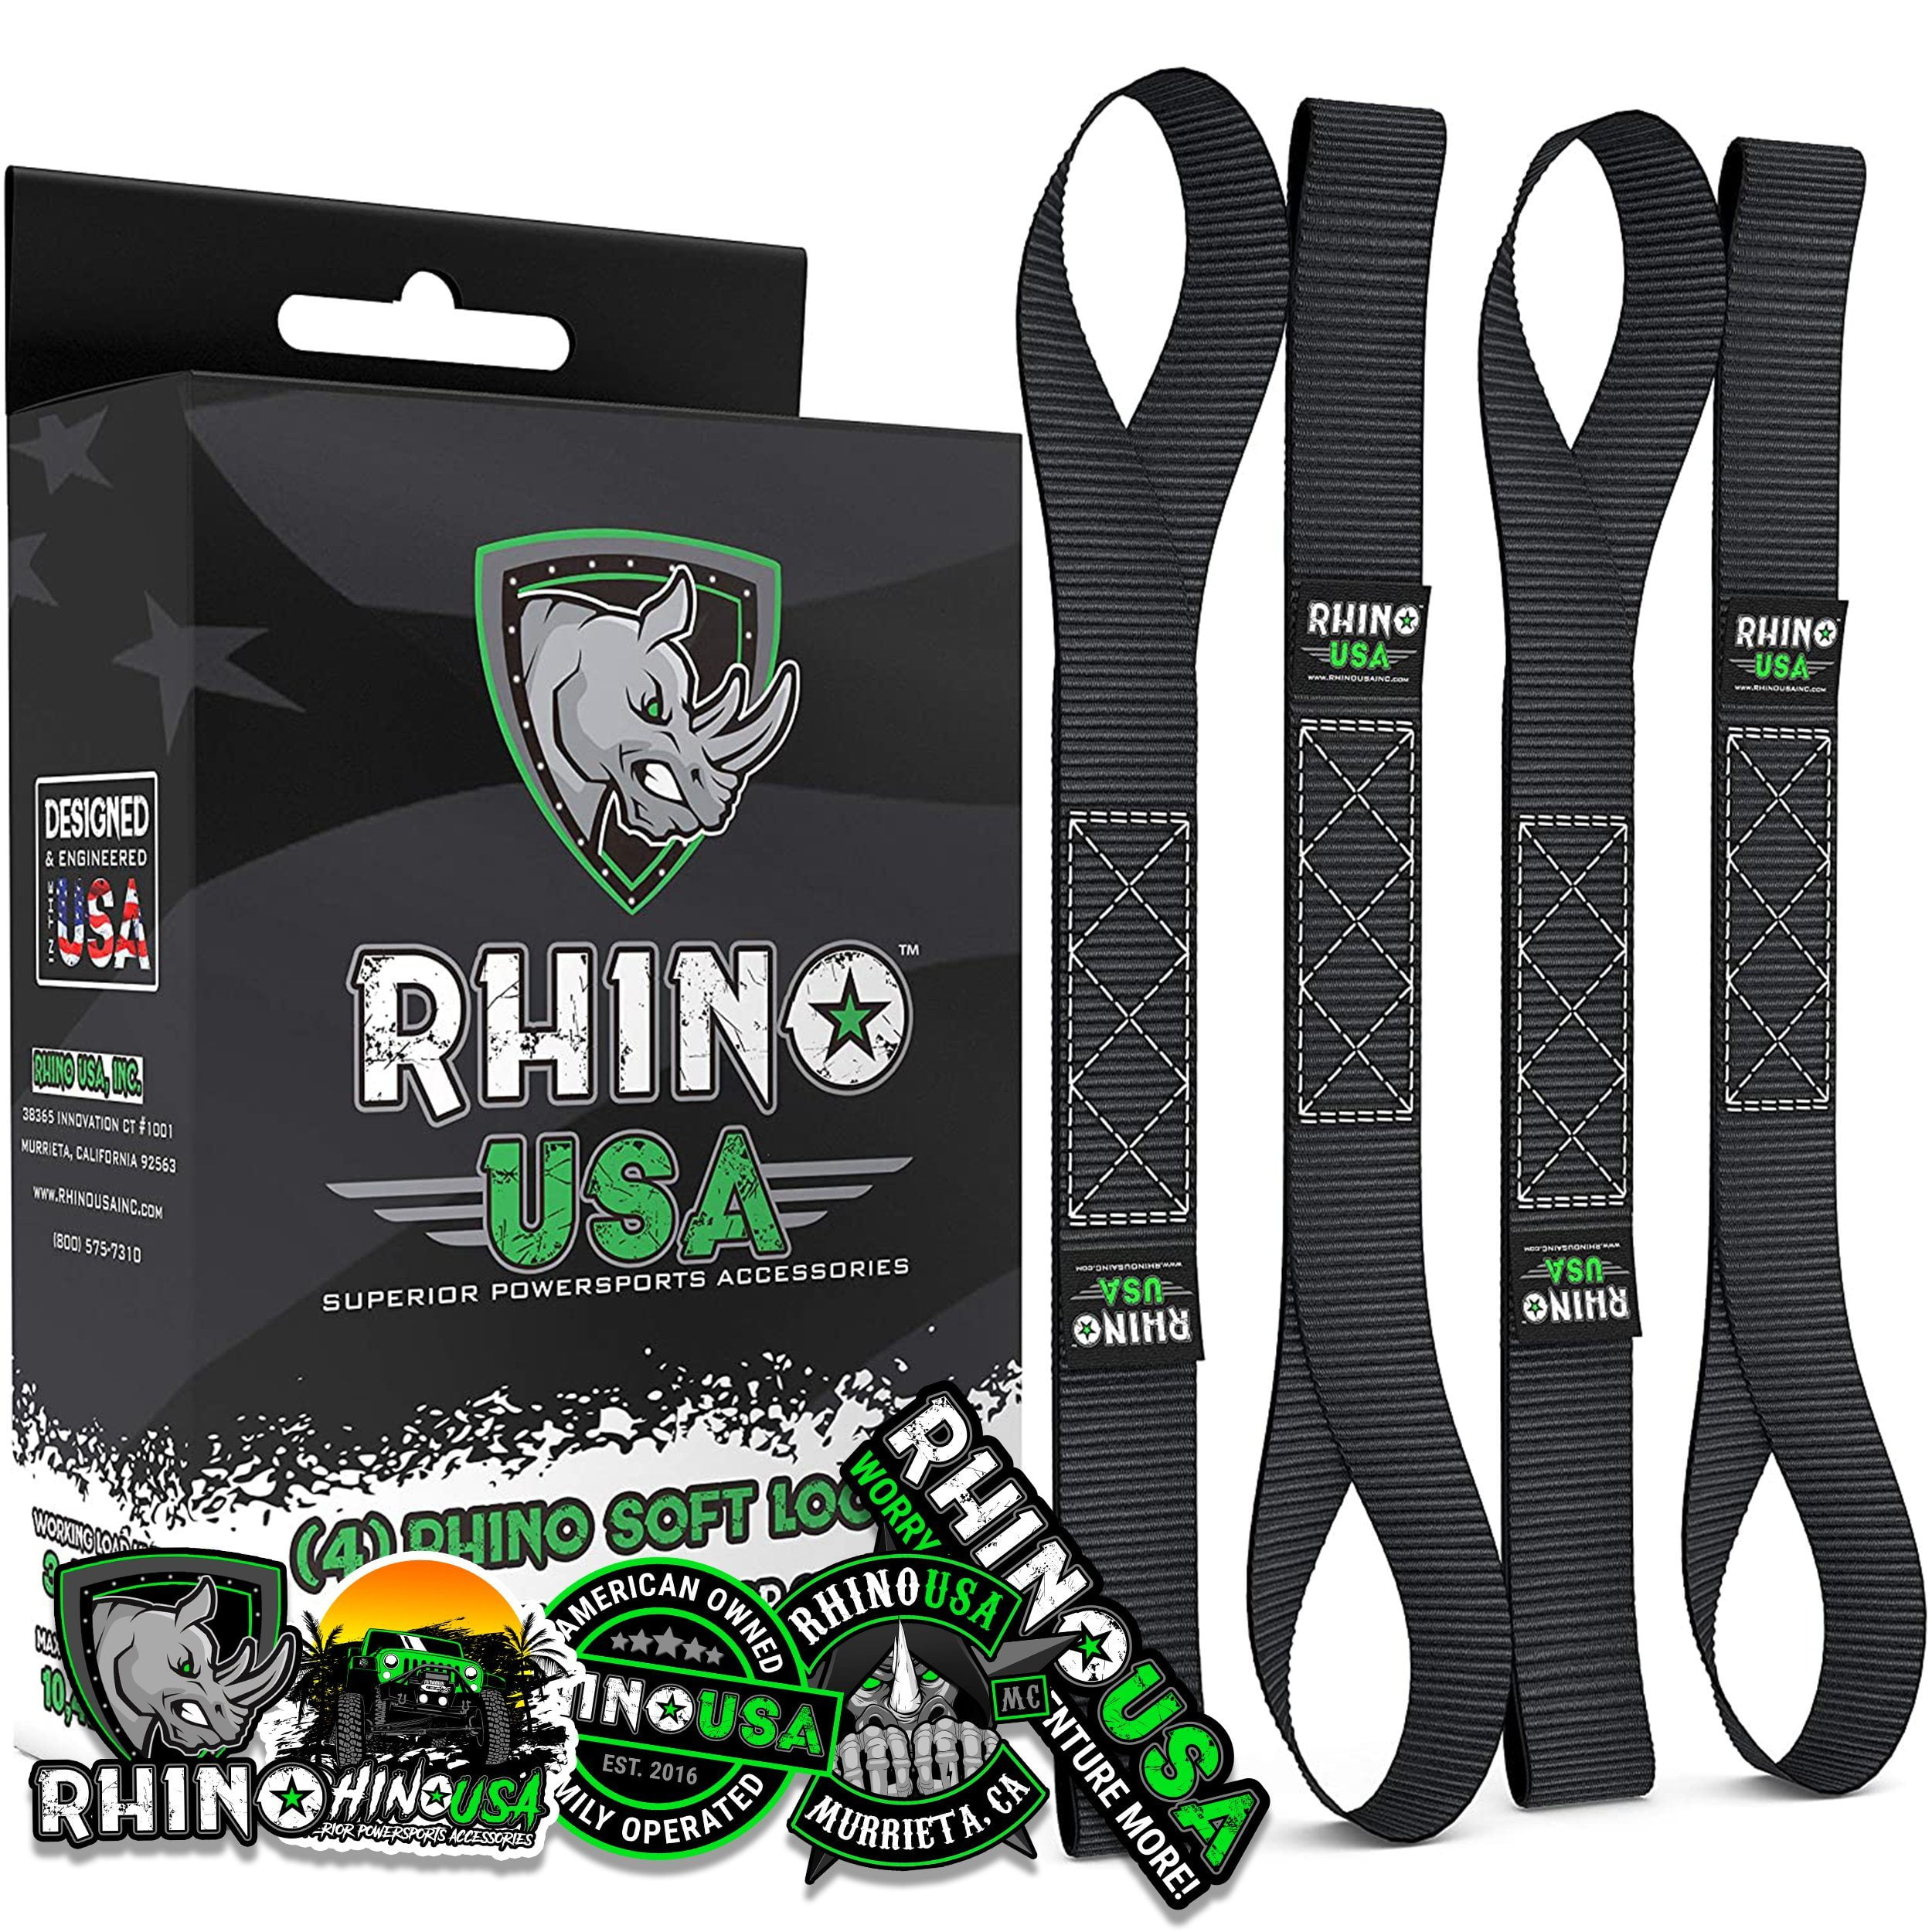 Rhino USA - 1.7 x 17 Soft Loop Tie-Down Straps (4-Pack) - 10,427lbs Max  Break Strength (2 H, 9oz) 